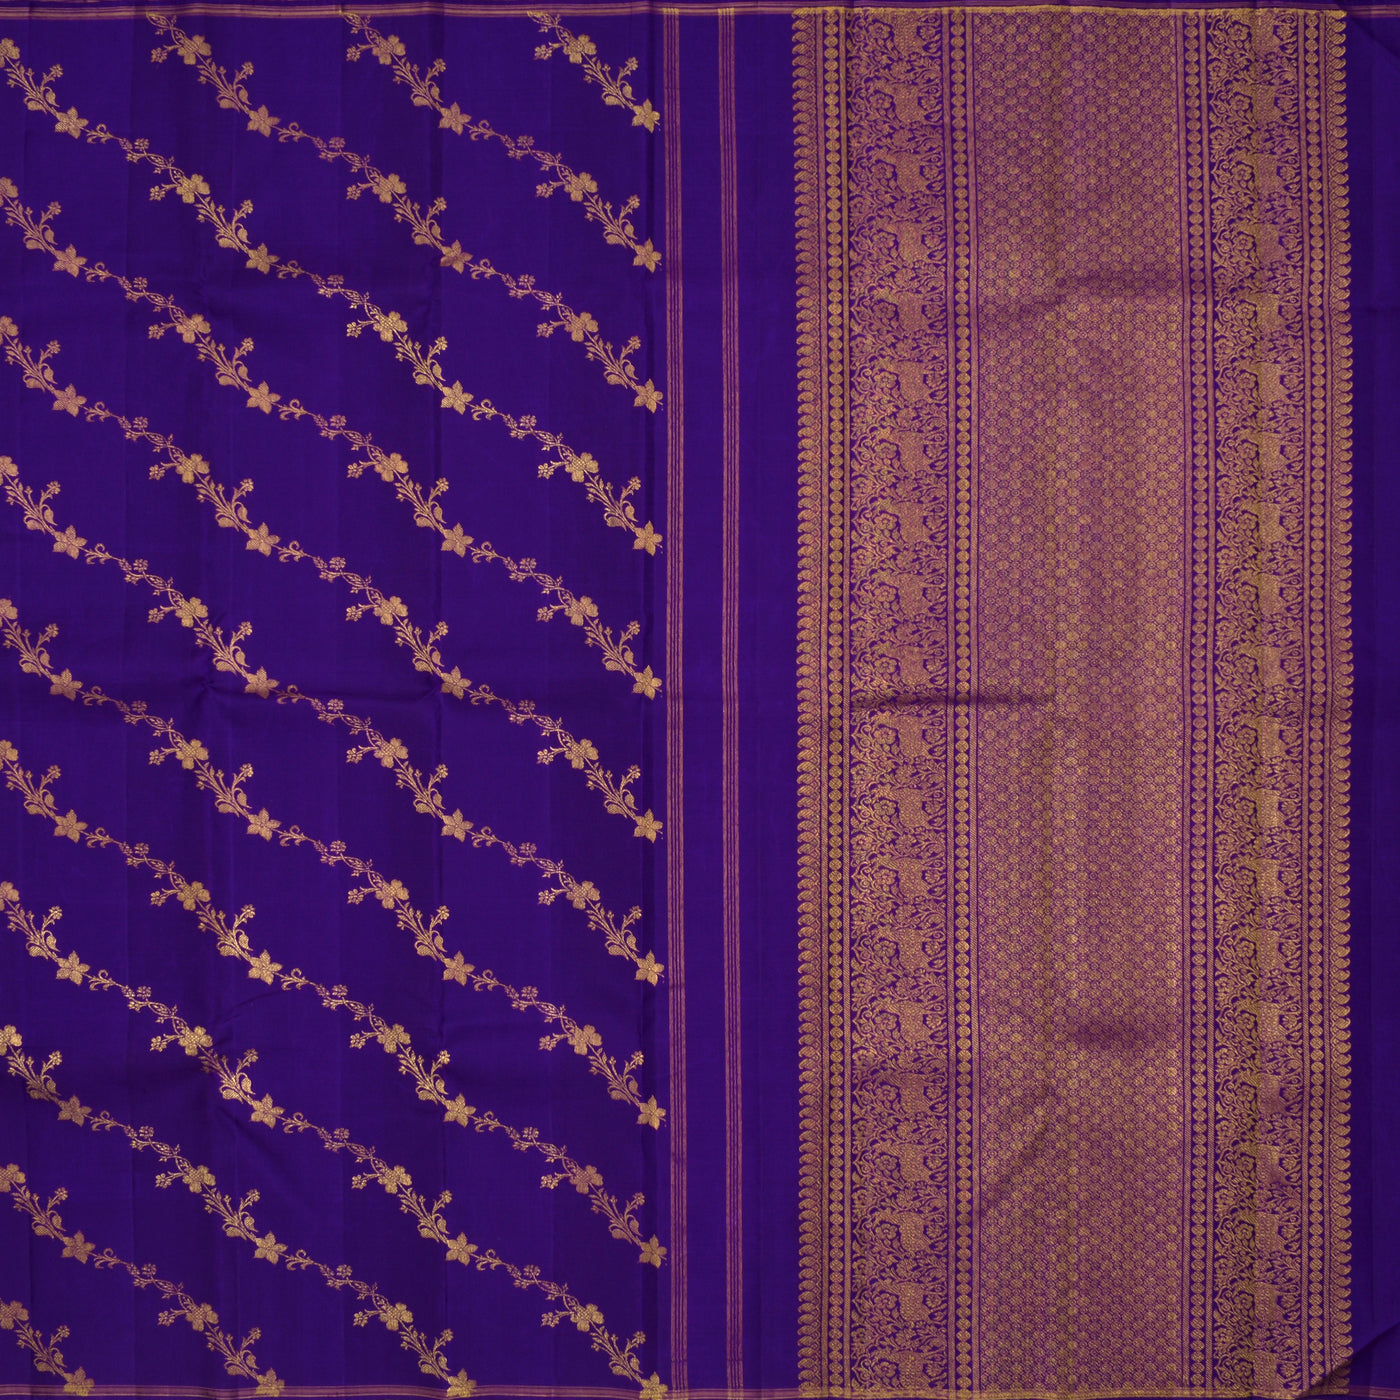 Violet Kanchipuram Silk Saree with Kodi Creeper Design